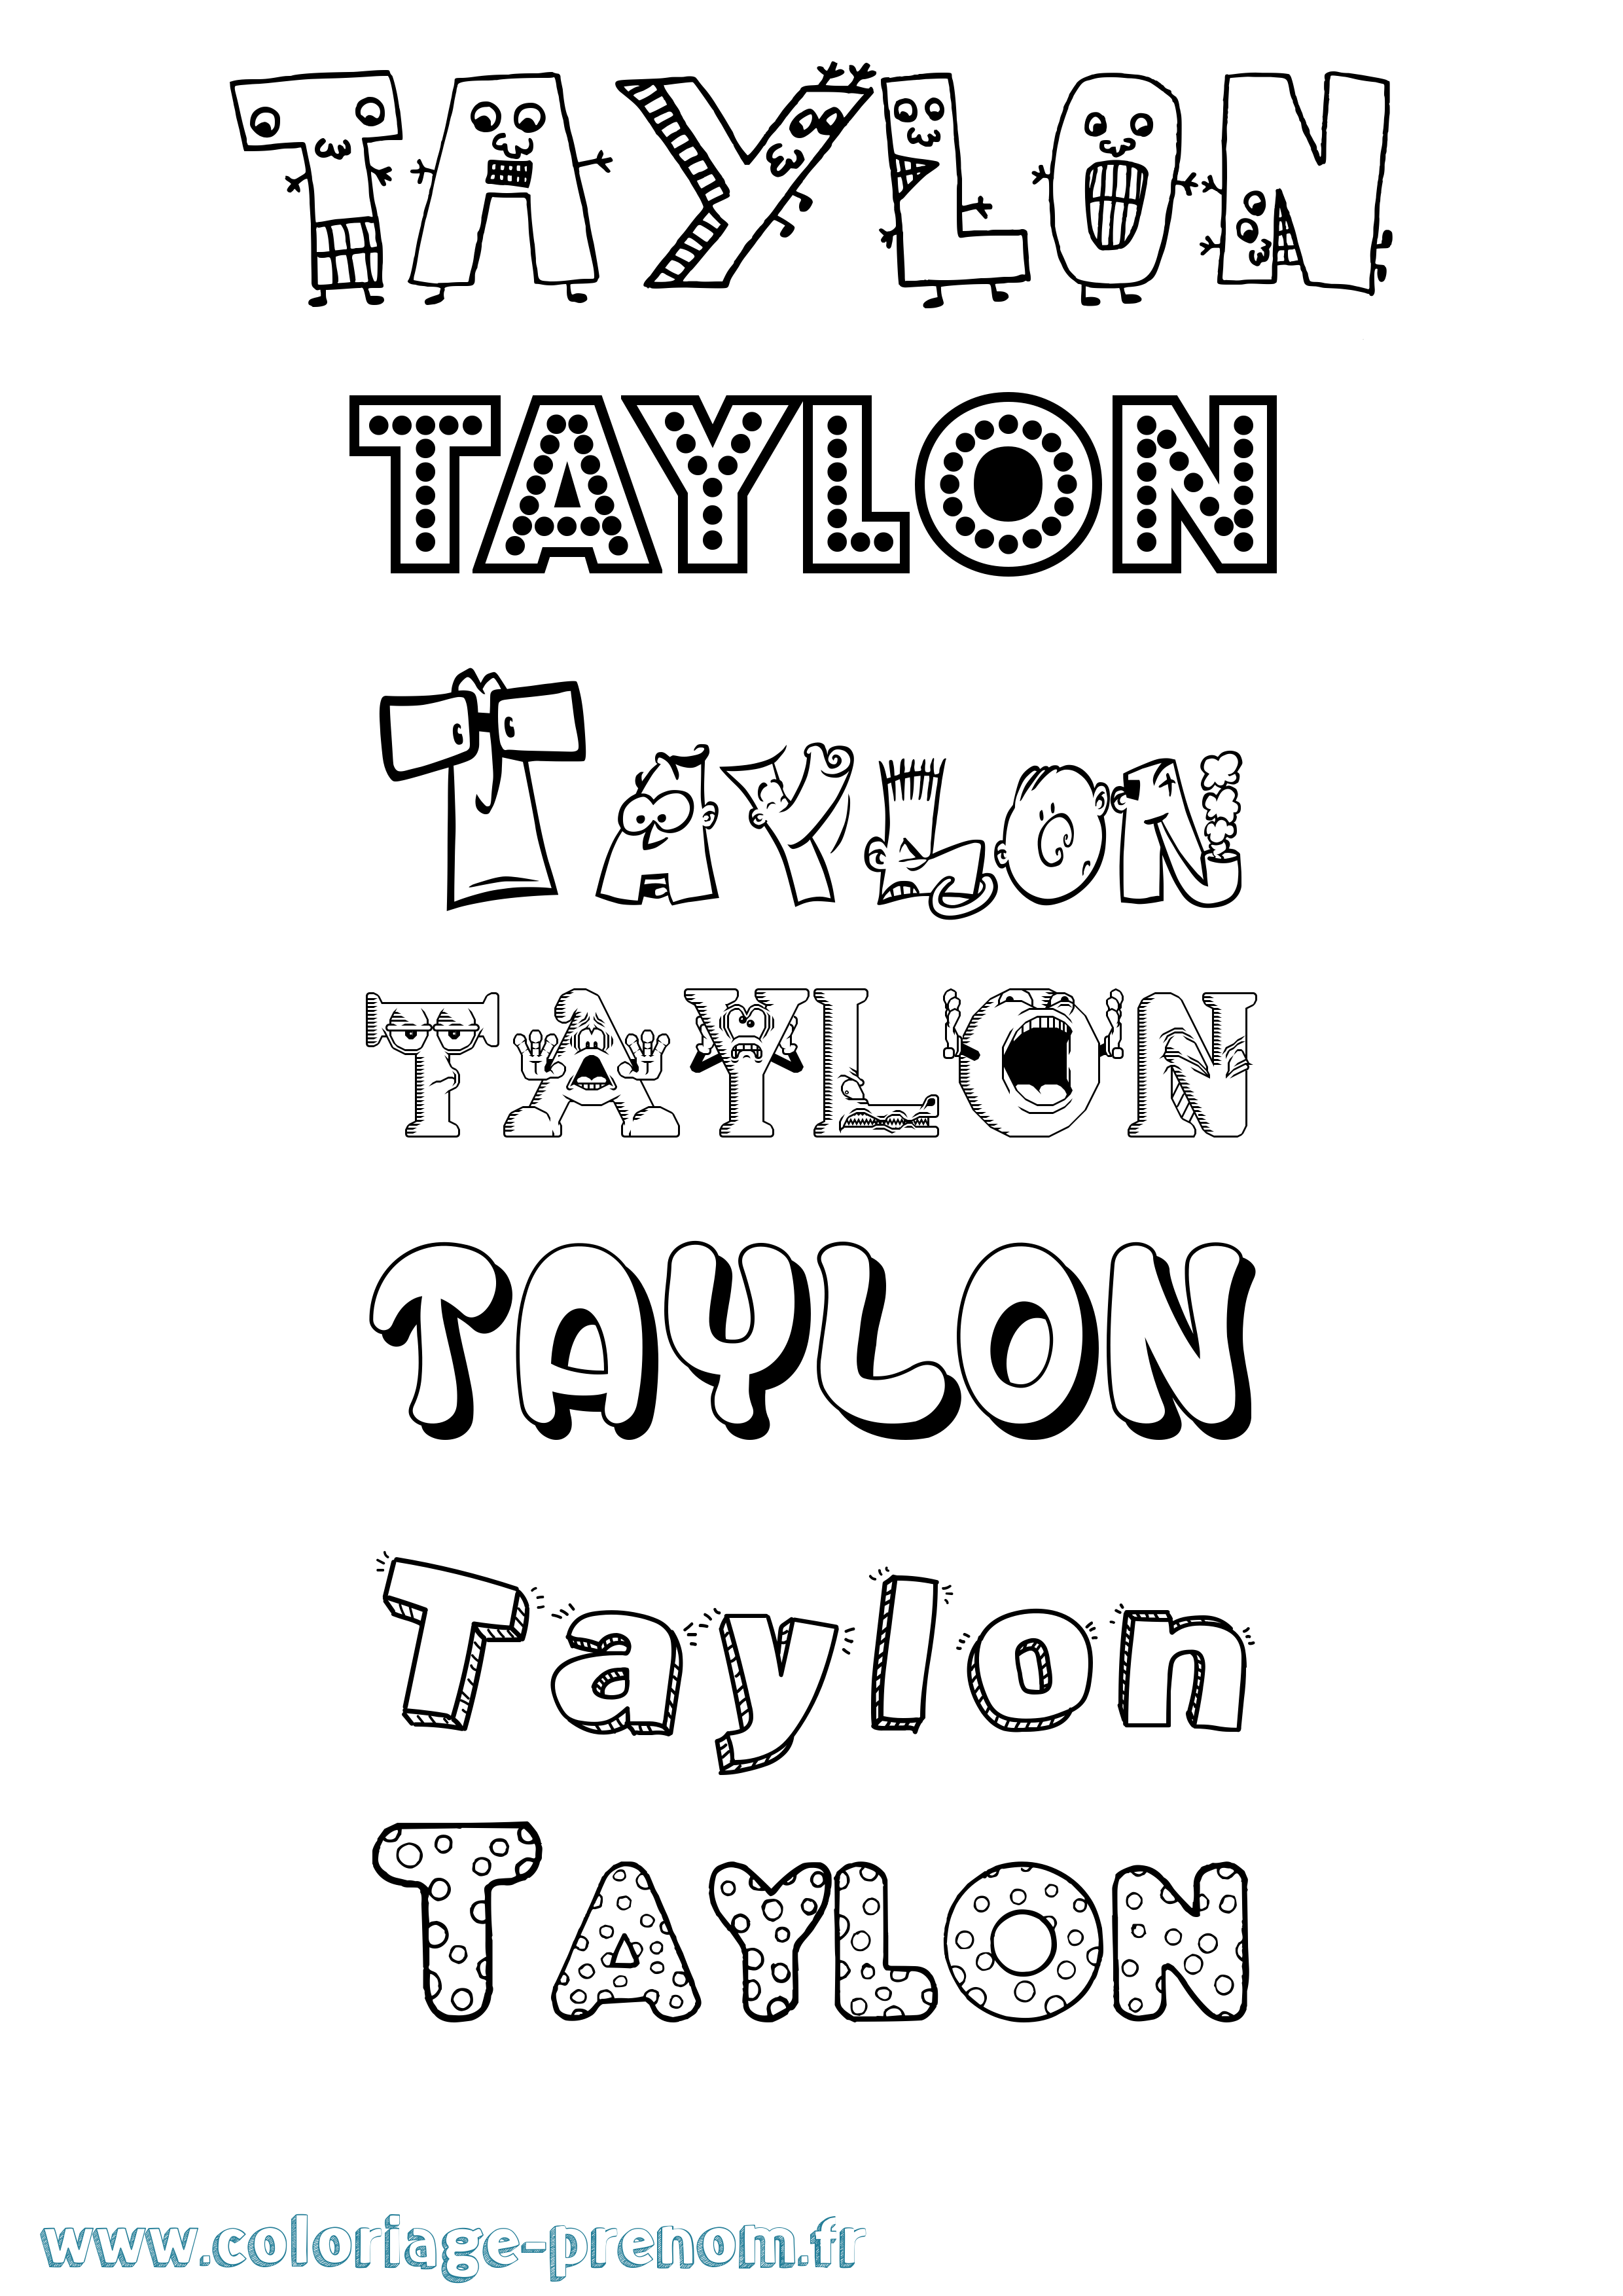 Coloriage prénom Taylon Fun